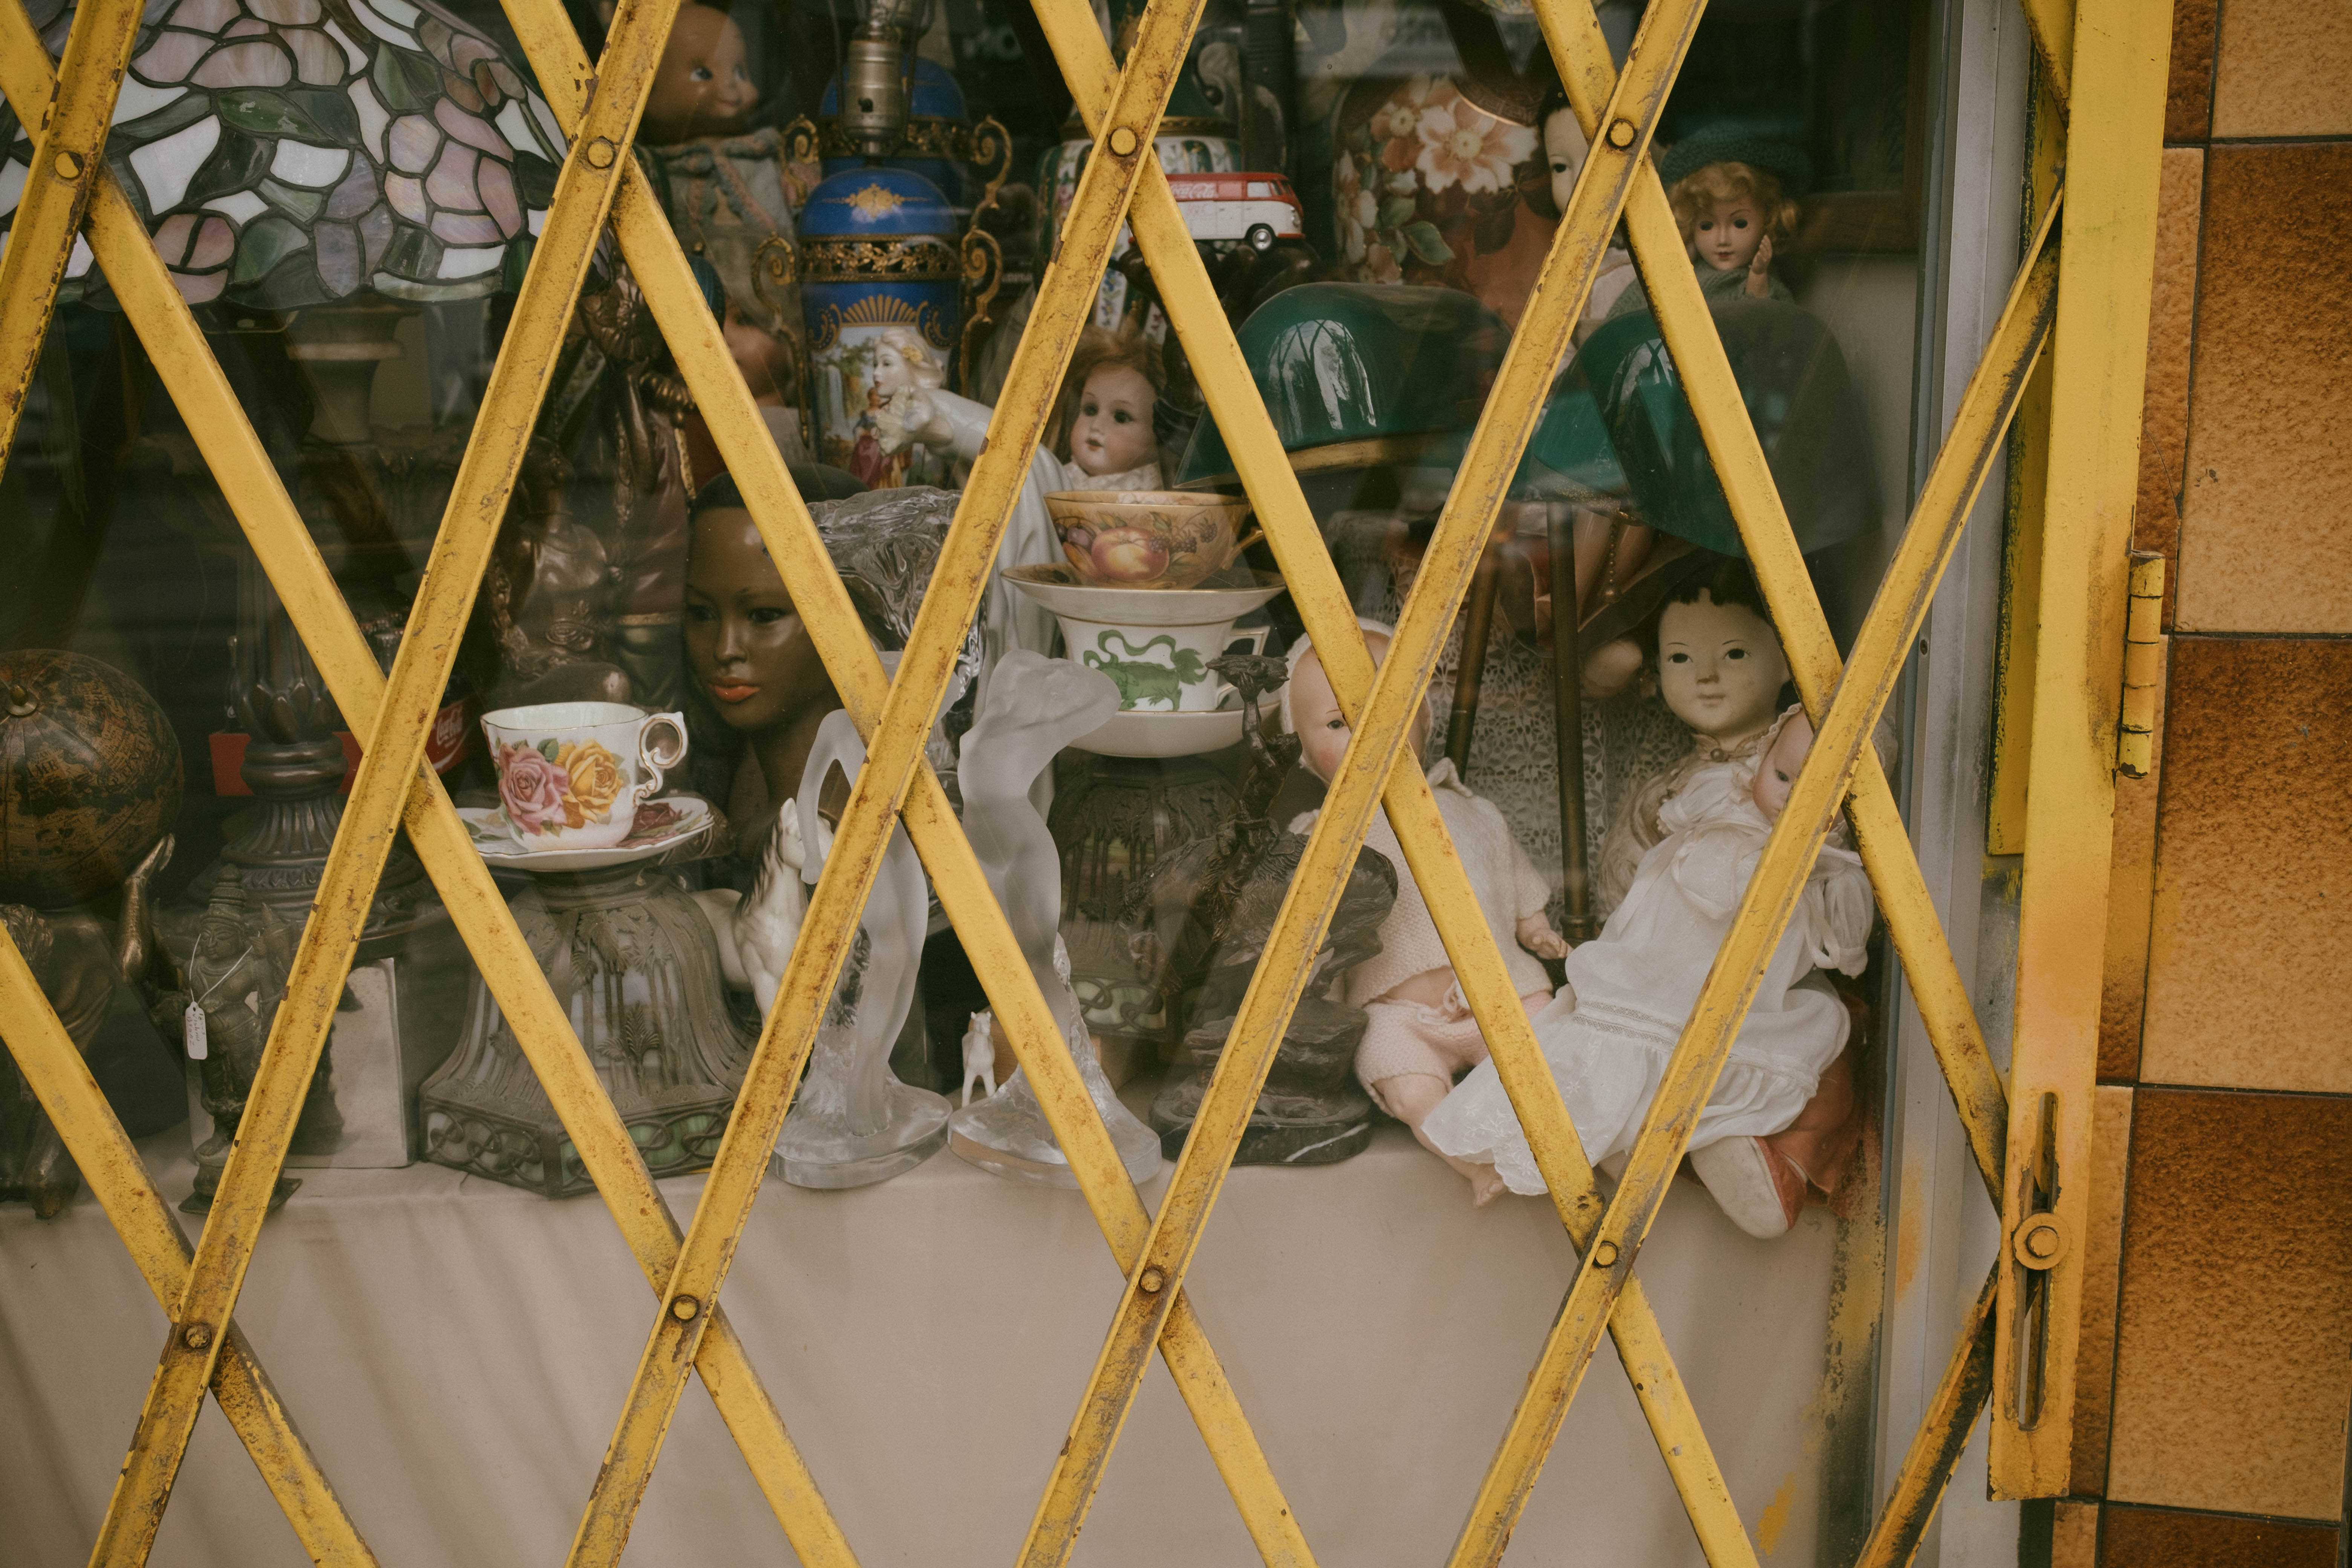 Creepy dolls in a store window hidden behind grates